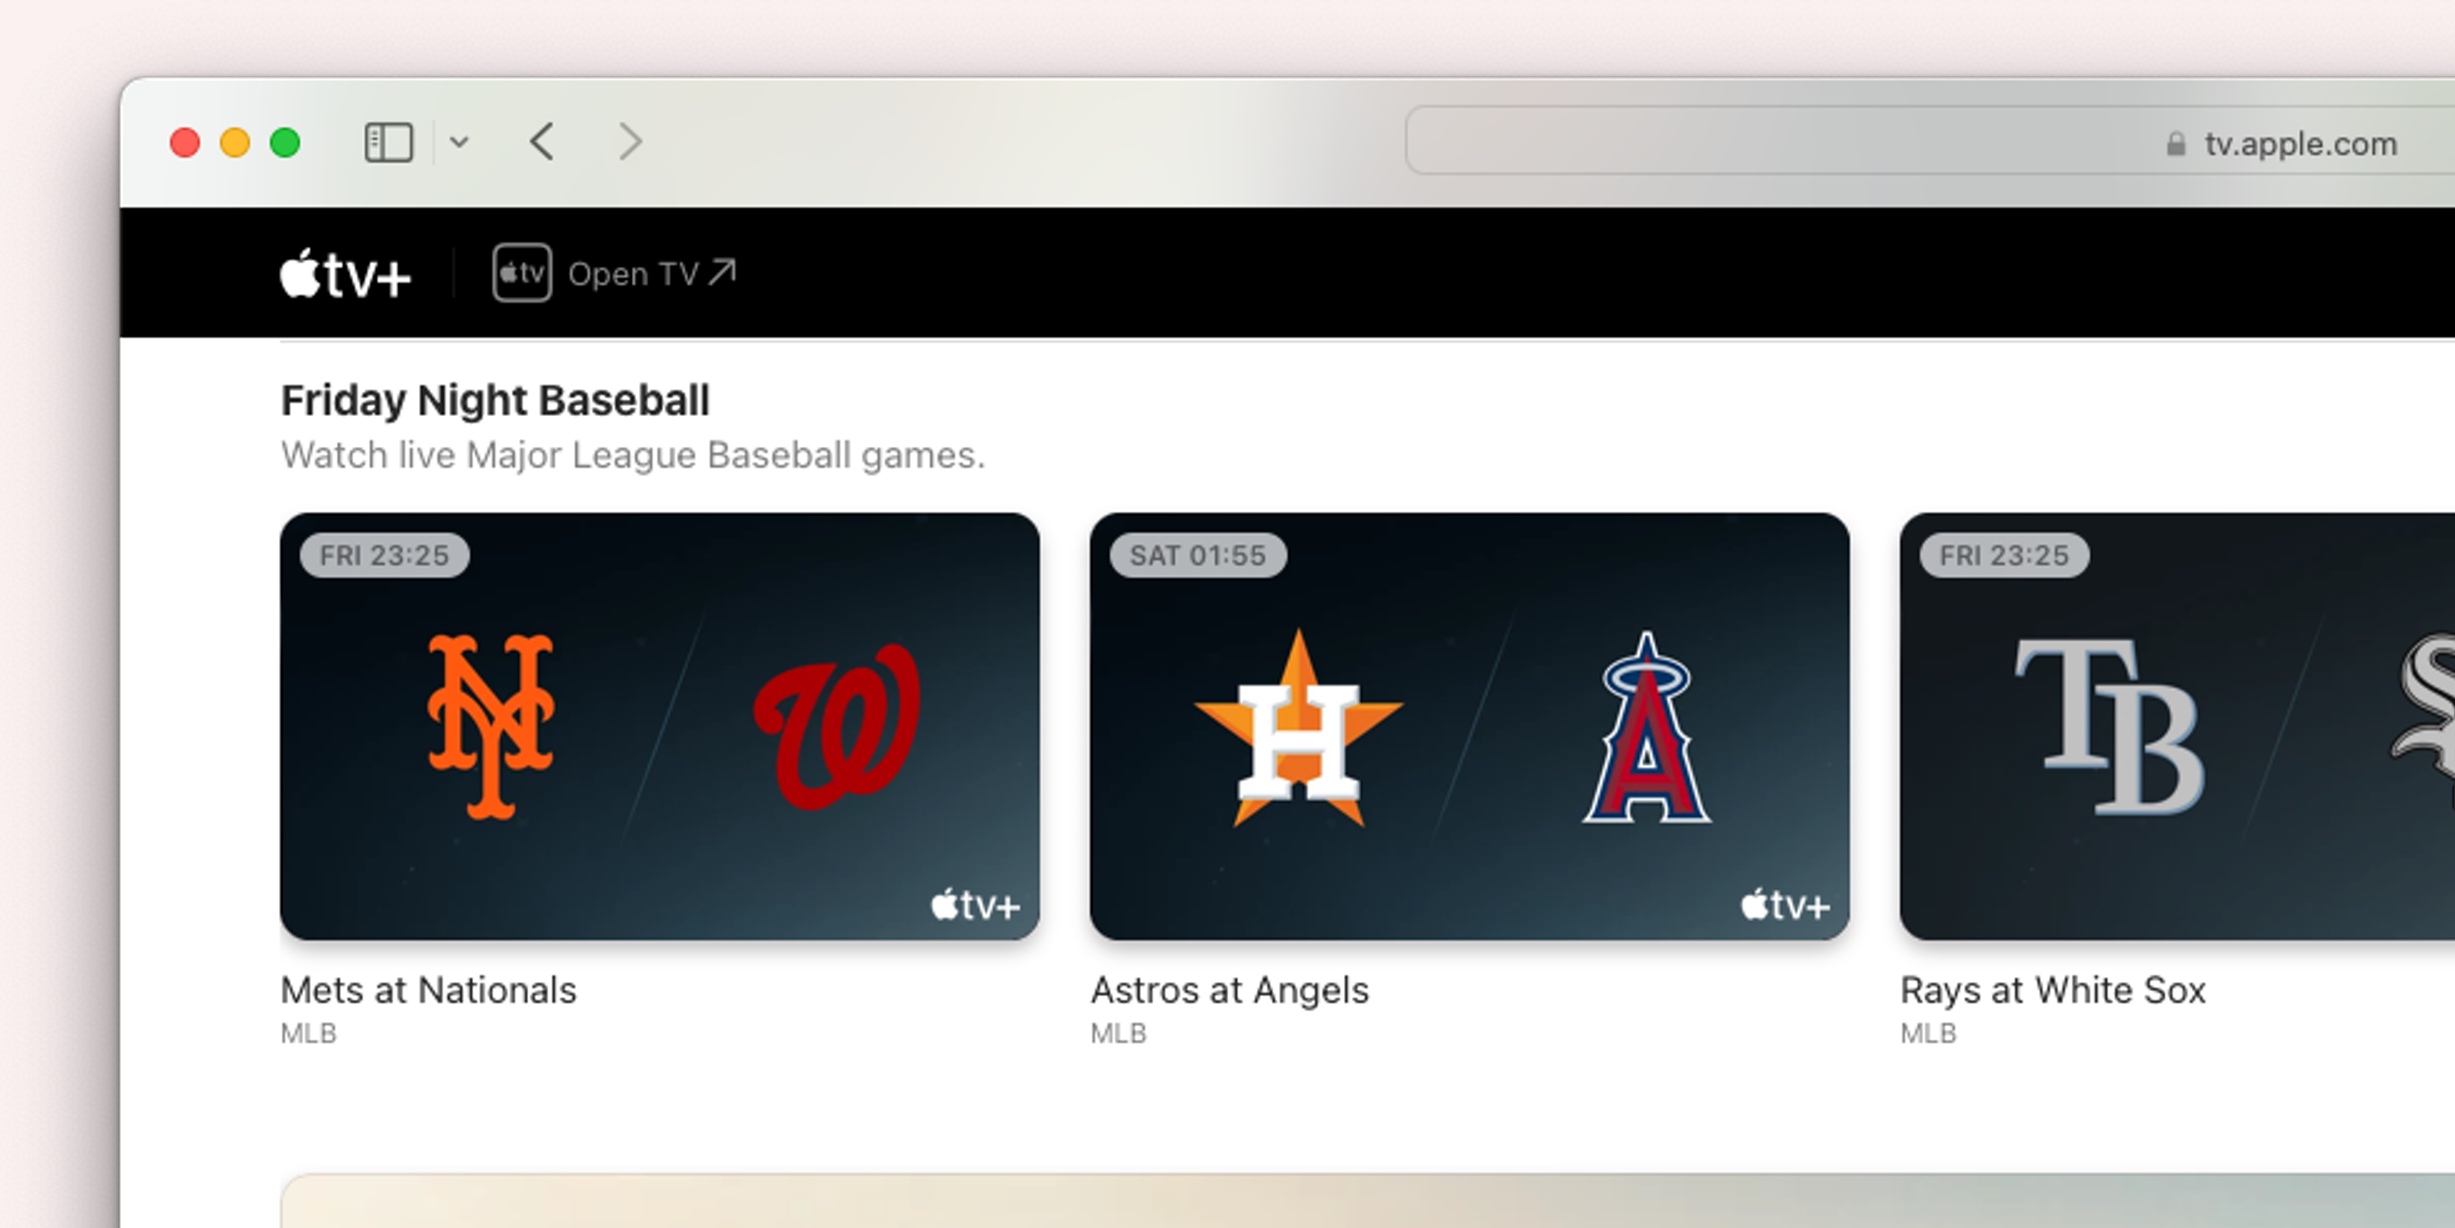 Friday Night Baseball appears in TV app ahead of MLB season start